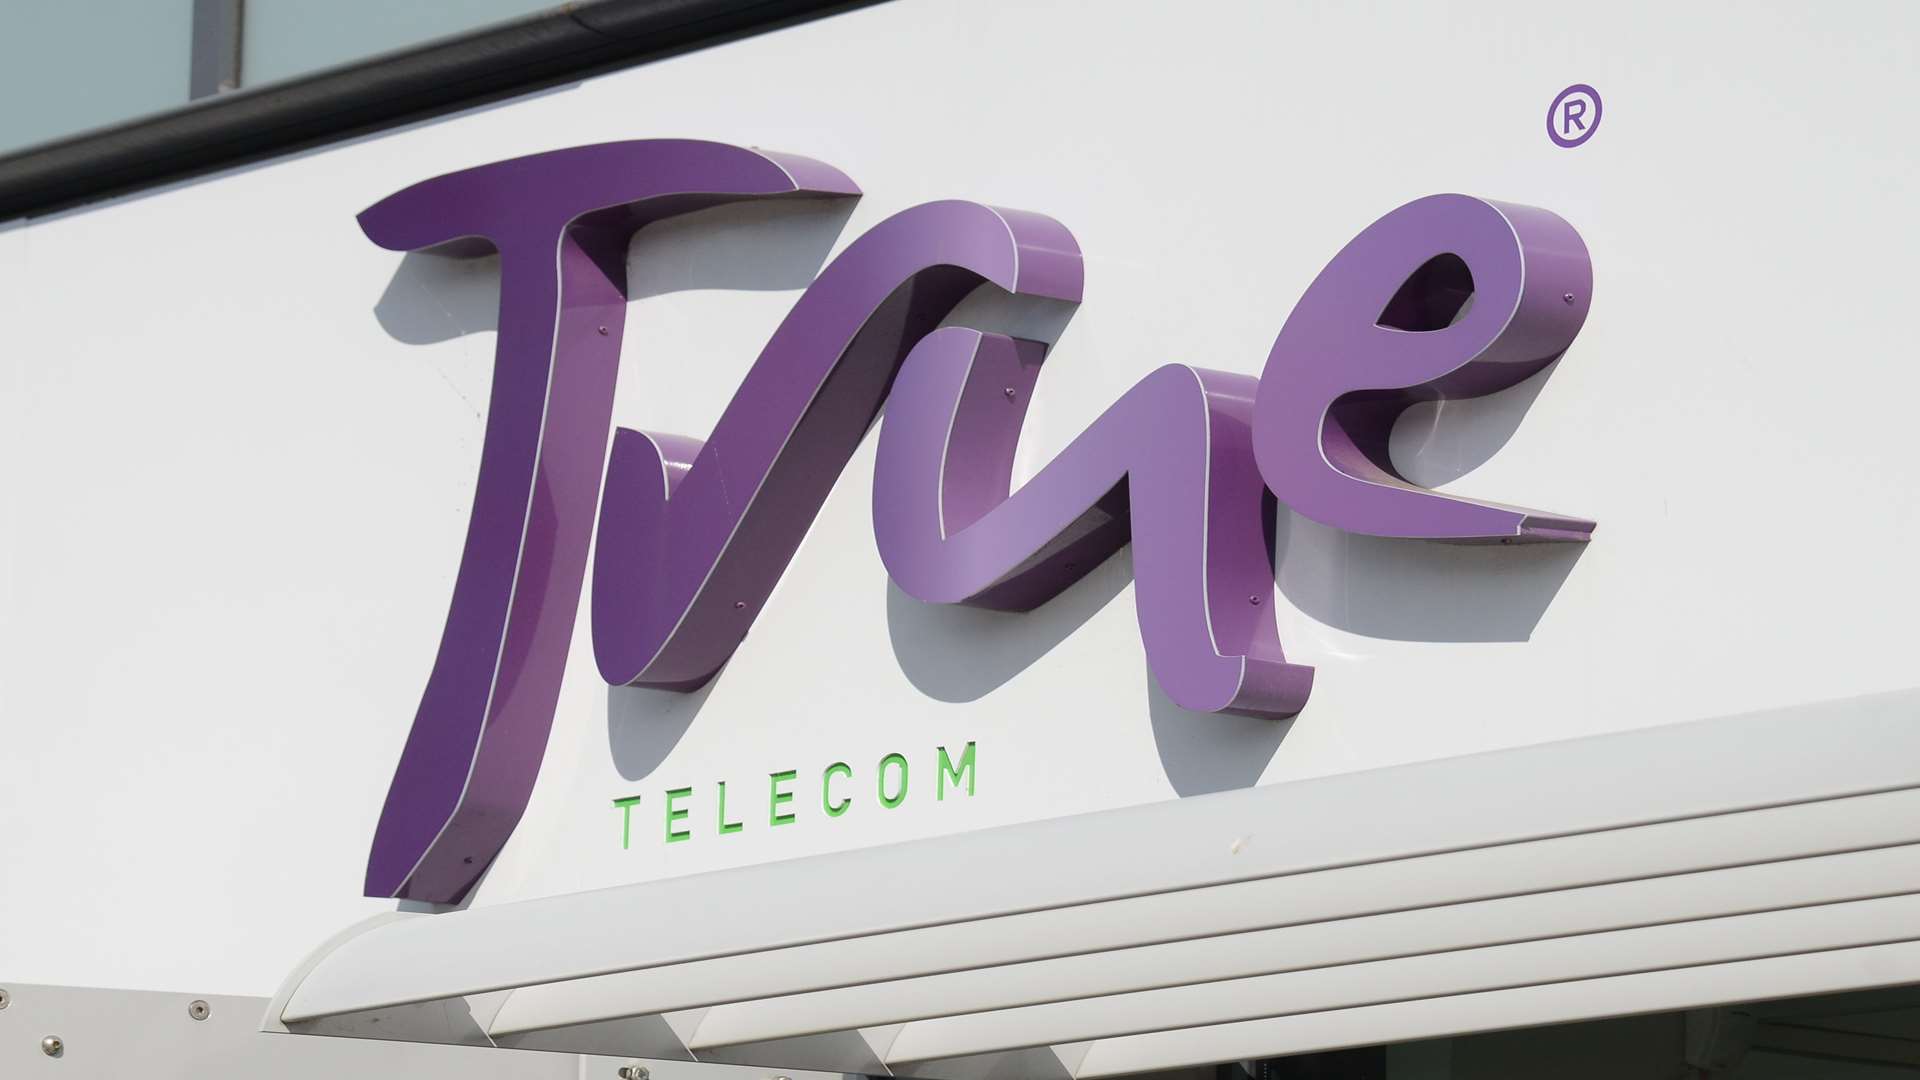 True Telecom is based in Crossways Business Park in Dartford